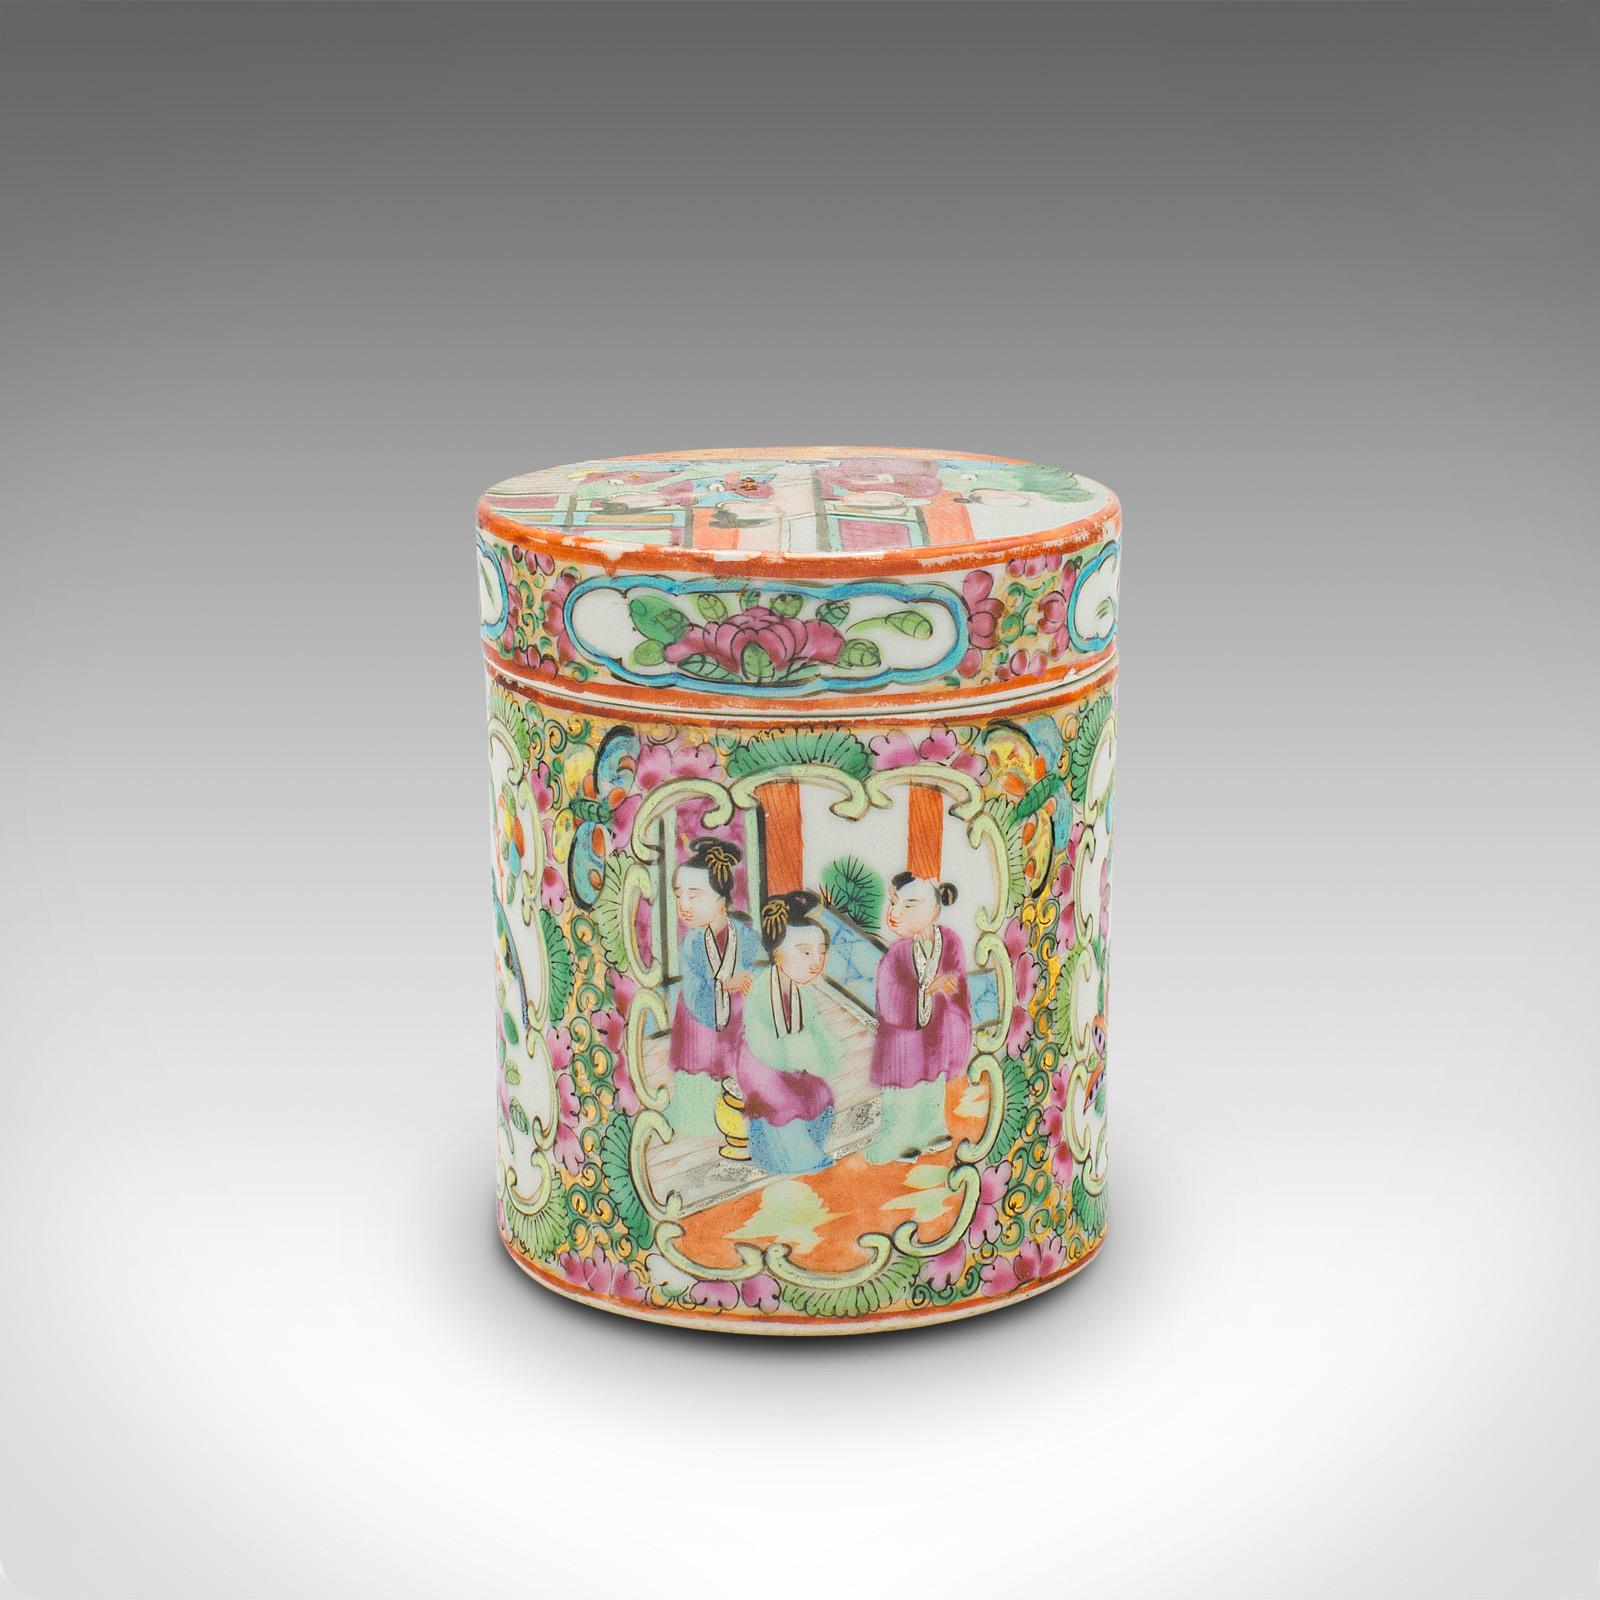 19th Century Small Antique Famille Rose Spice Jar, Chinese Ceramic, Decorative Pot, Victorian